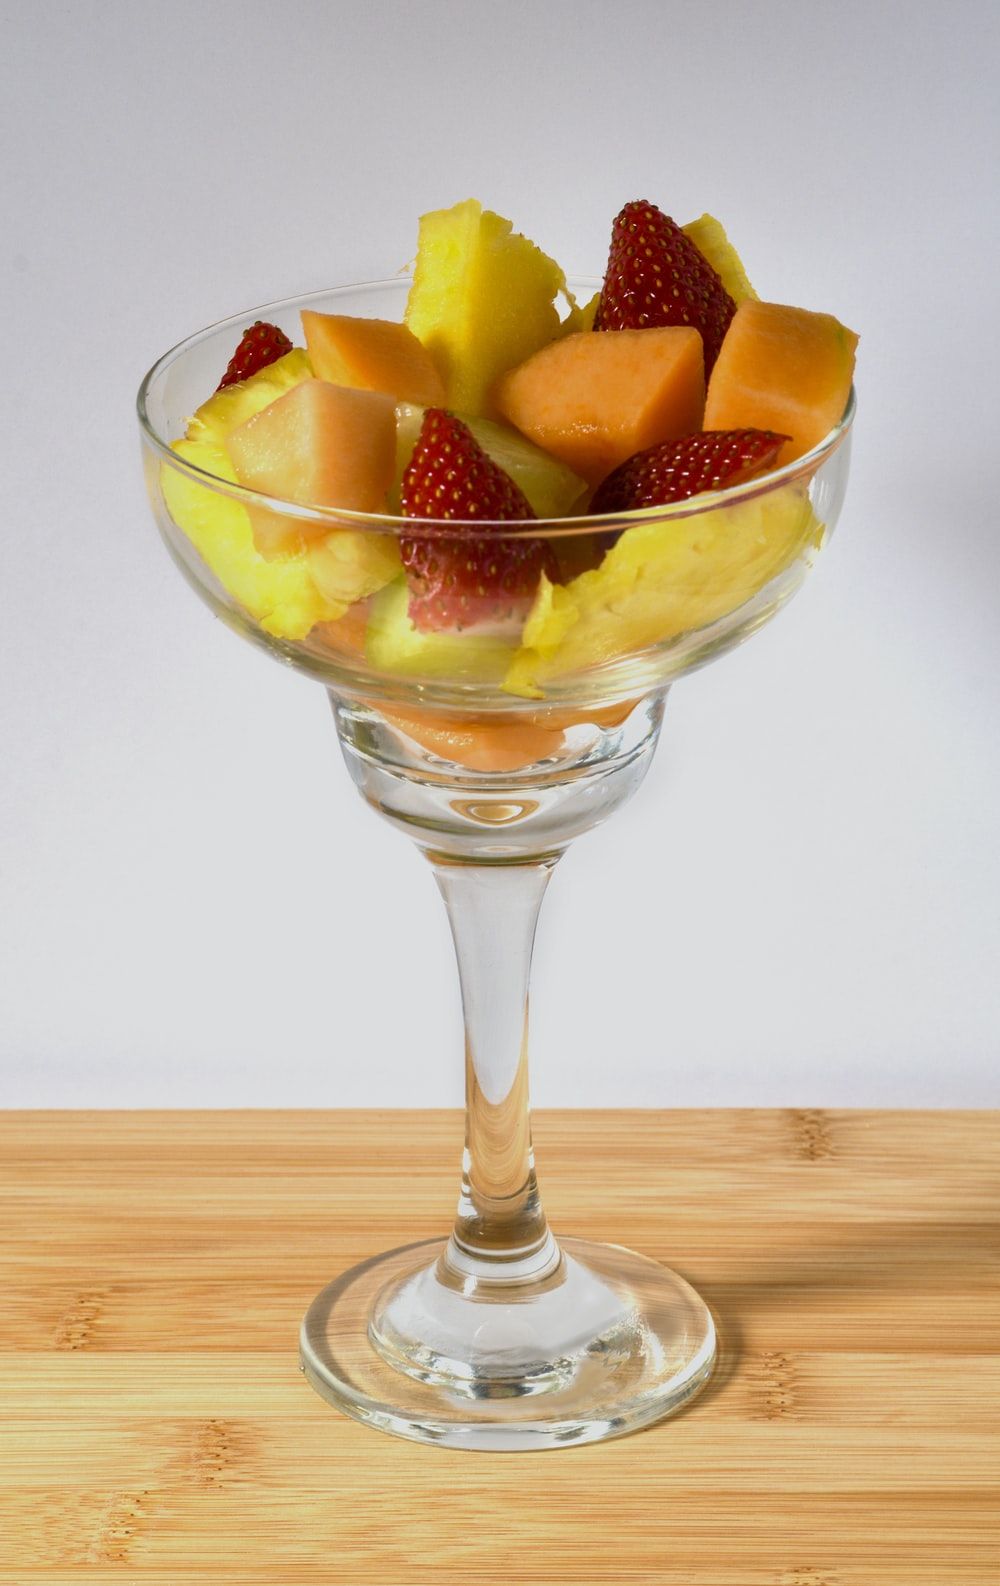 Fruit Salad Picture. Download Free .com